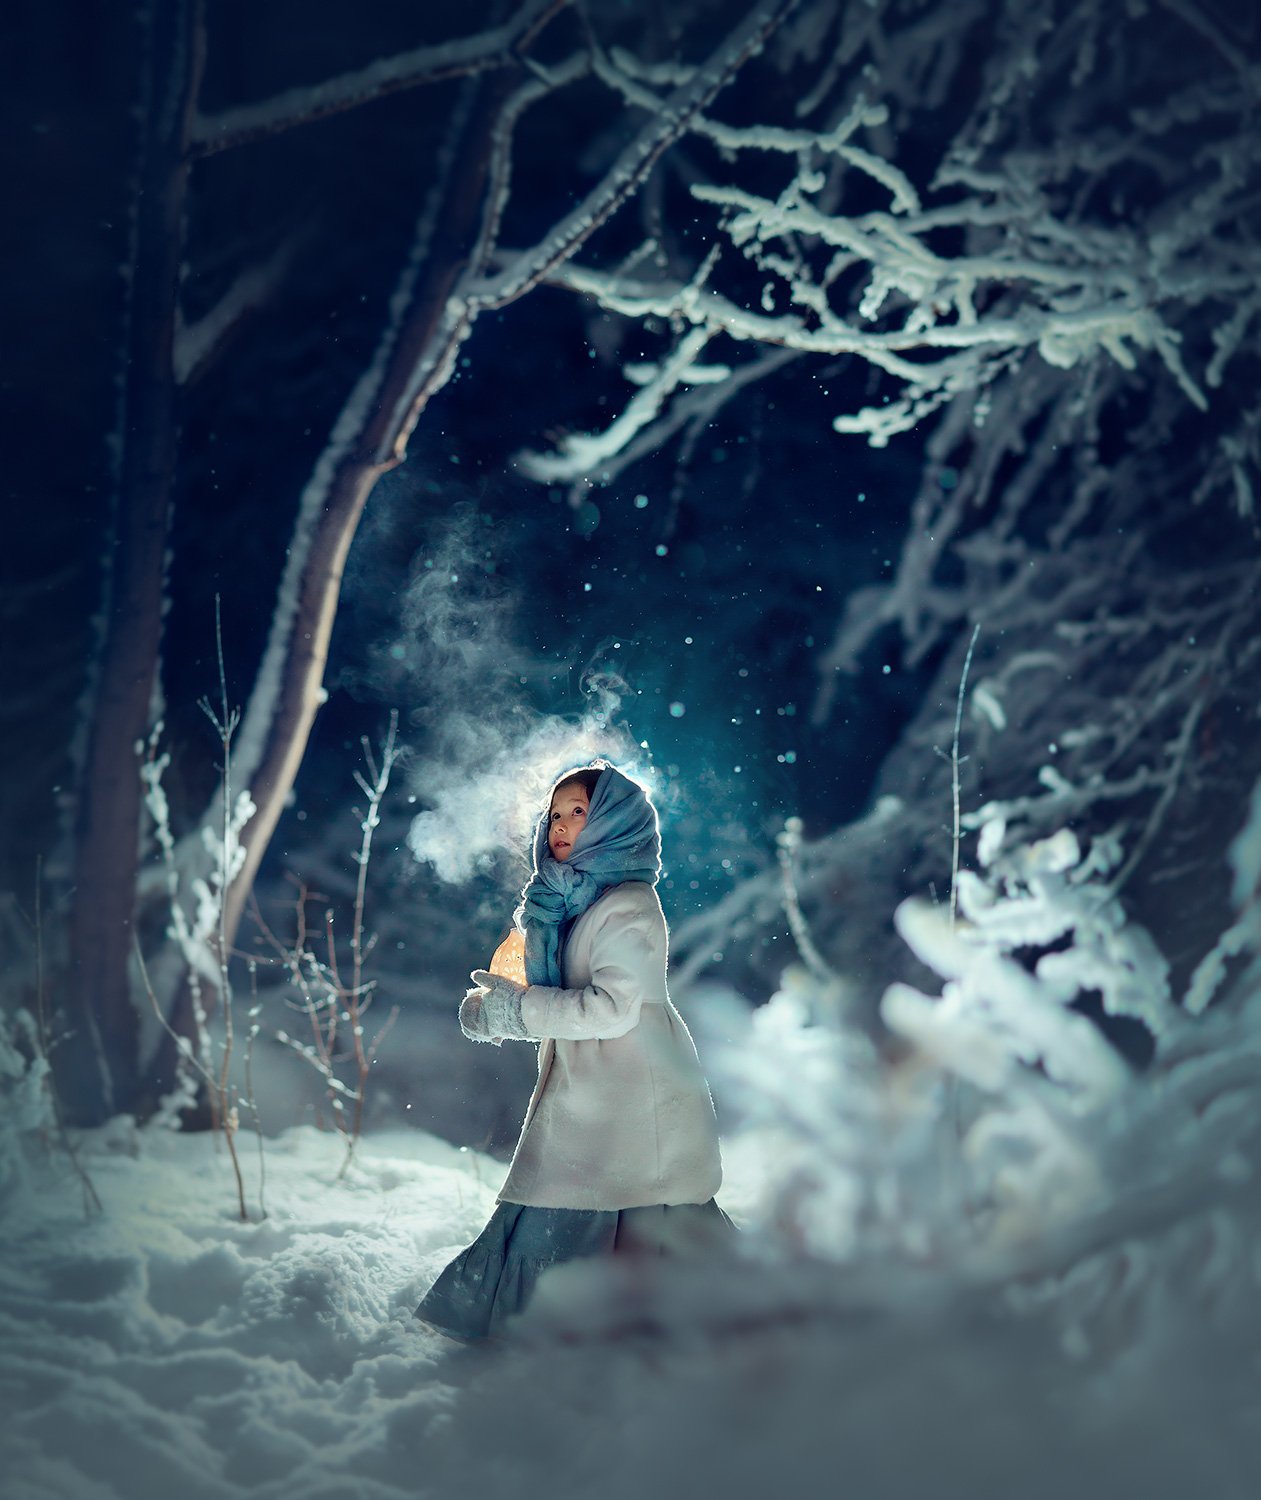 #winter #girl #night #magic#cold #lights #snow #ice #snowing #instawinter #wintertime #christmas #fairy #fairytale #woodland #wonderland #stars #nightphotography #dark #fantasy #xmas #december #magic, Катрин Белоцерковская